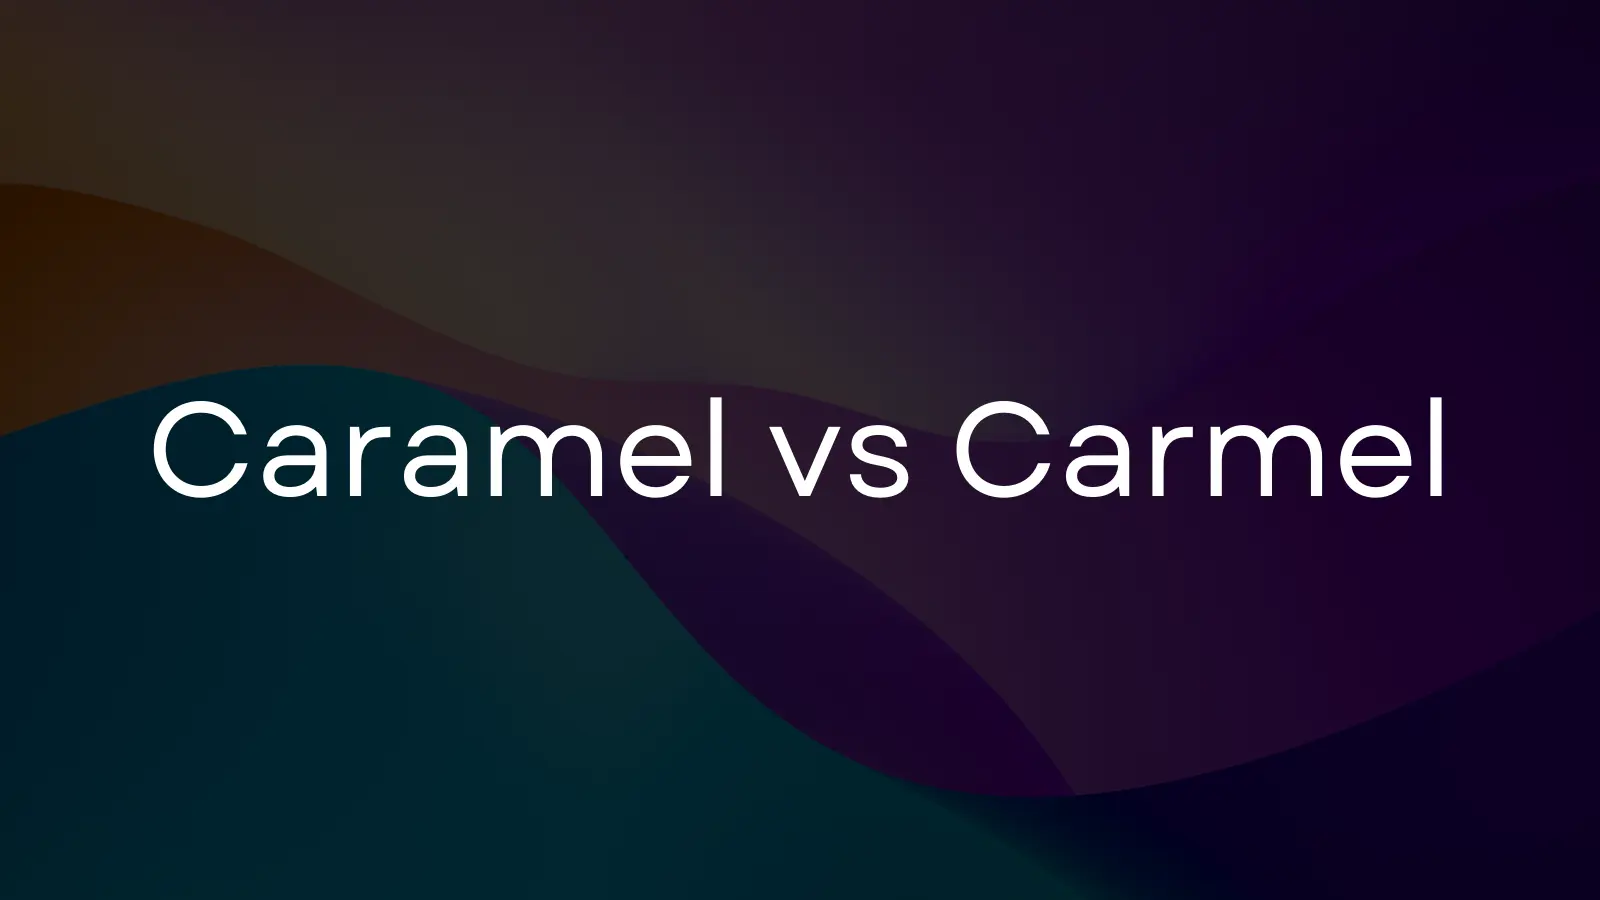 Caramel vs. Carmel: Learn the trick to make it stick